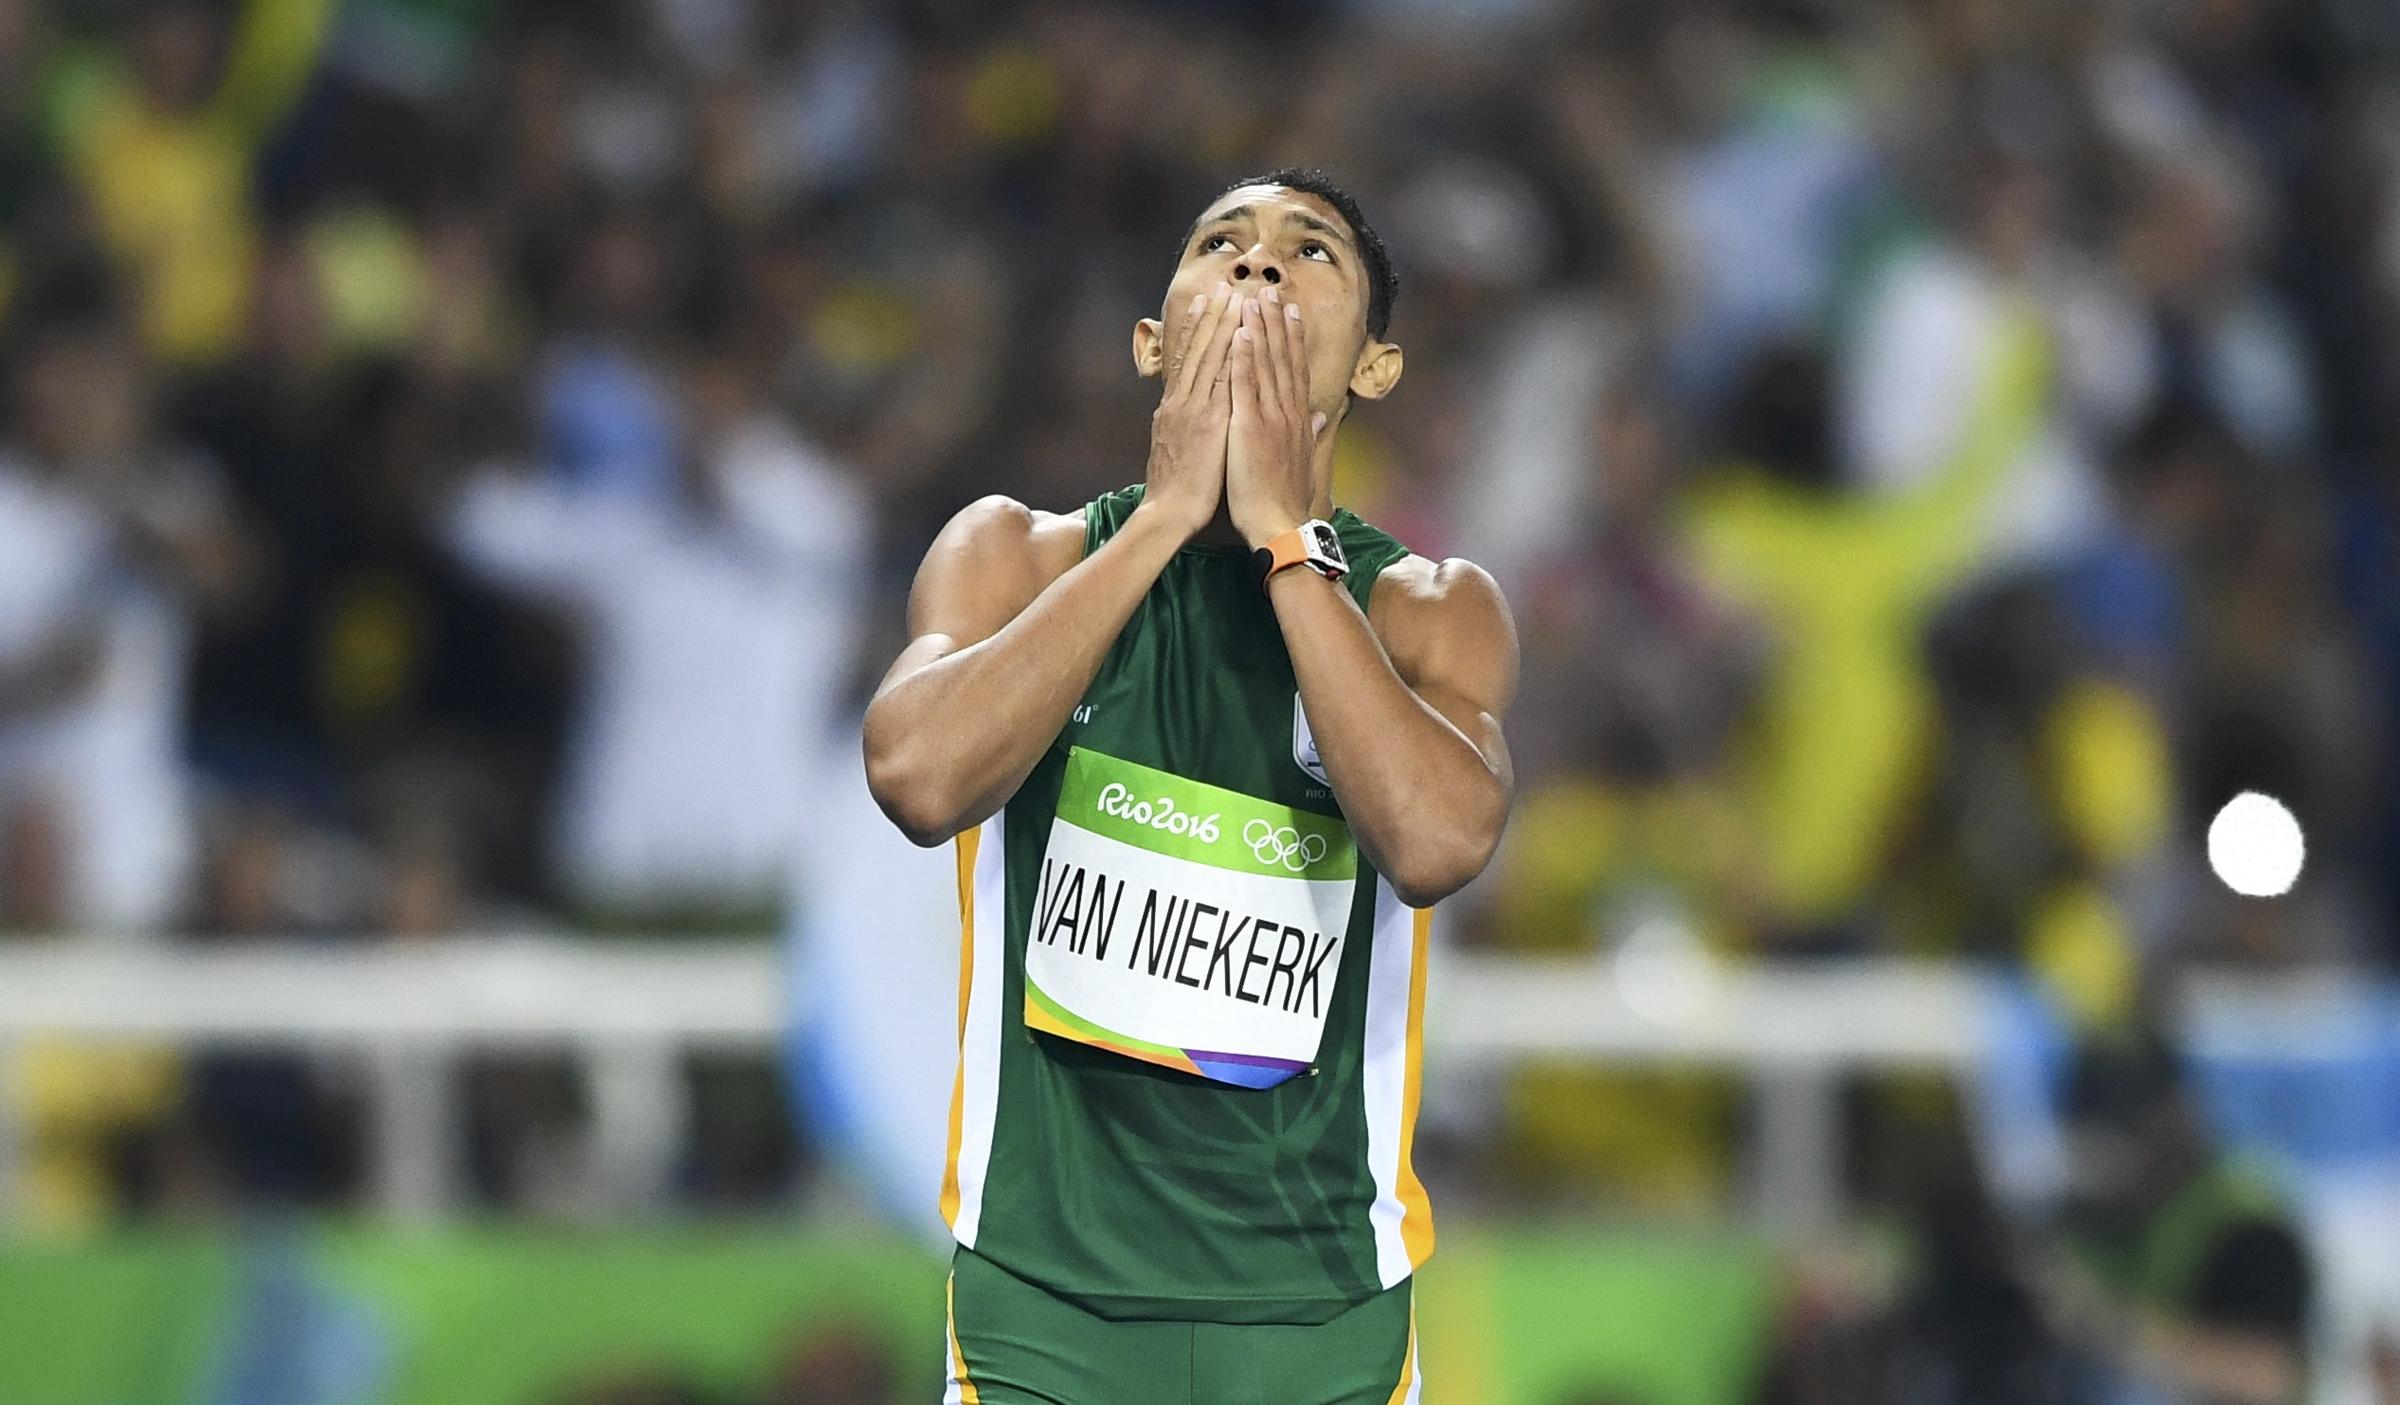 South Africans rejoice as Wayde van Niekerk sets a world record in Rio WJCT NEWS